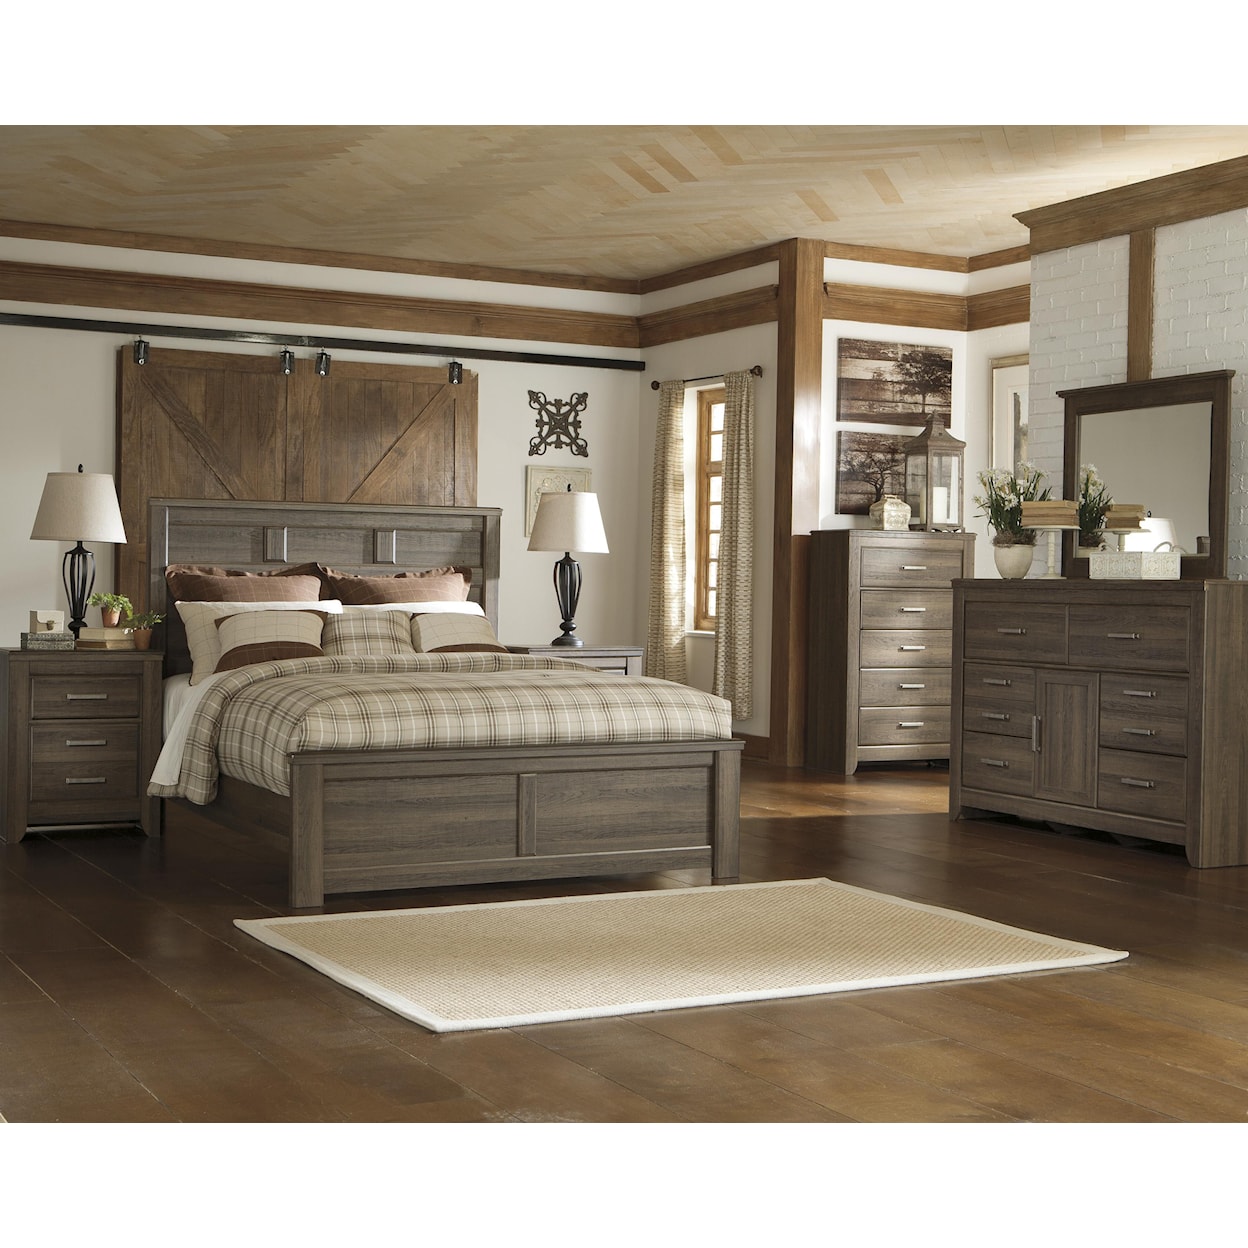 Ashley Furniture Signature Design Juararo California King Bedroom Group